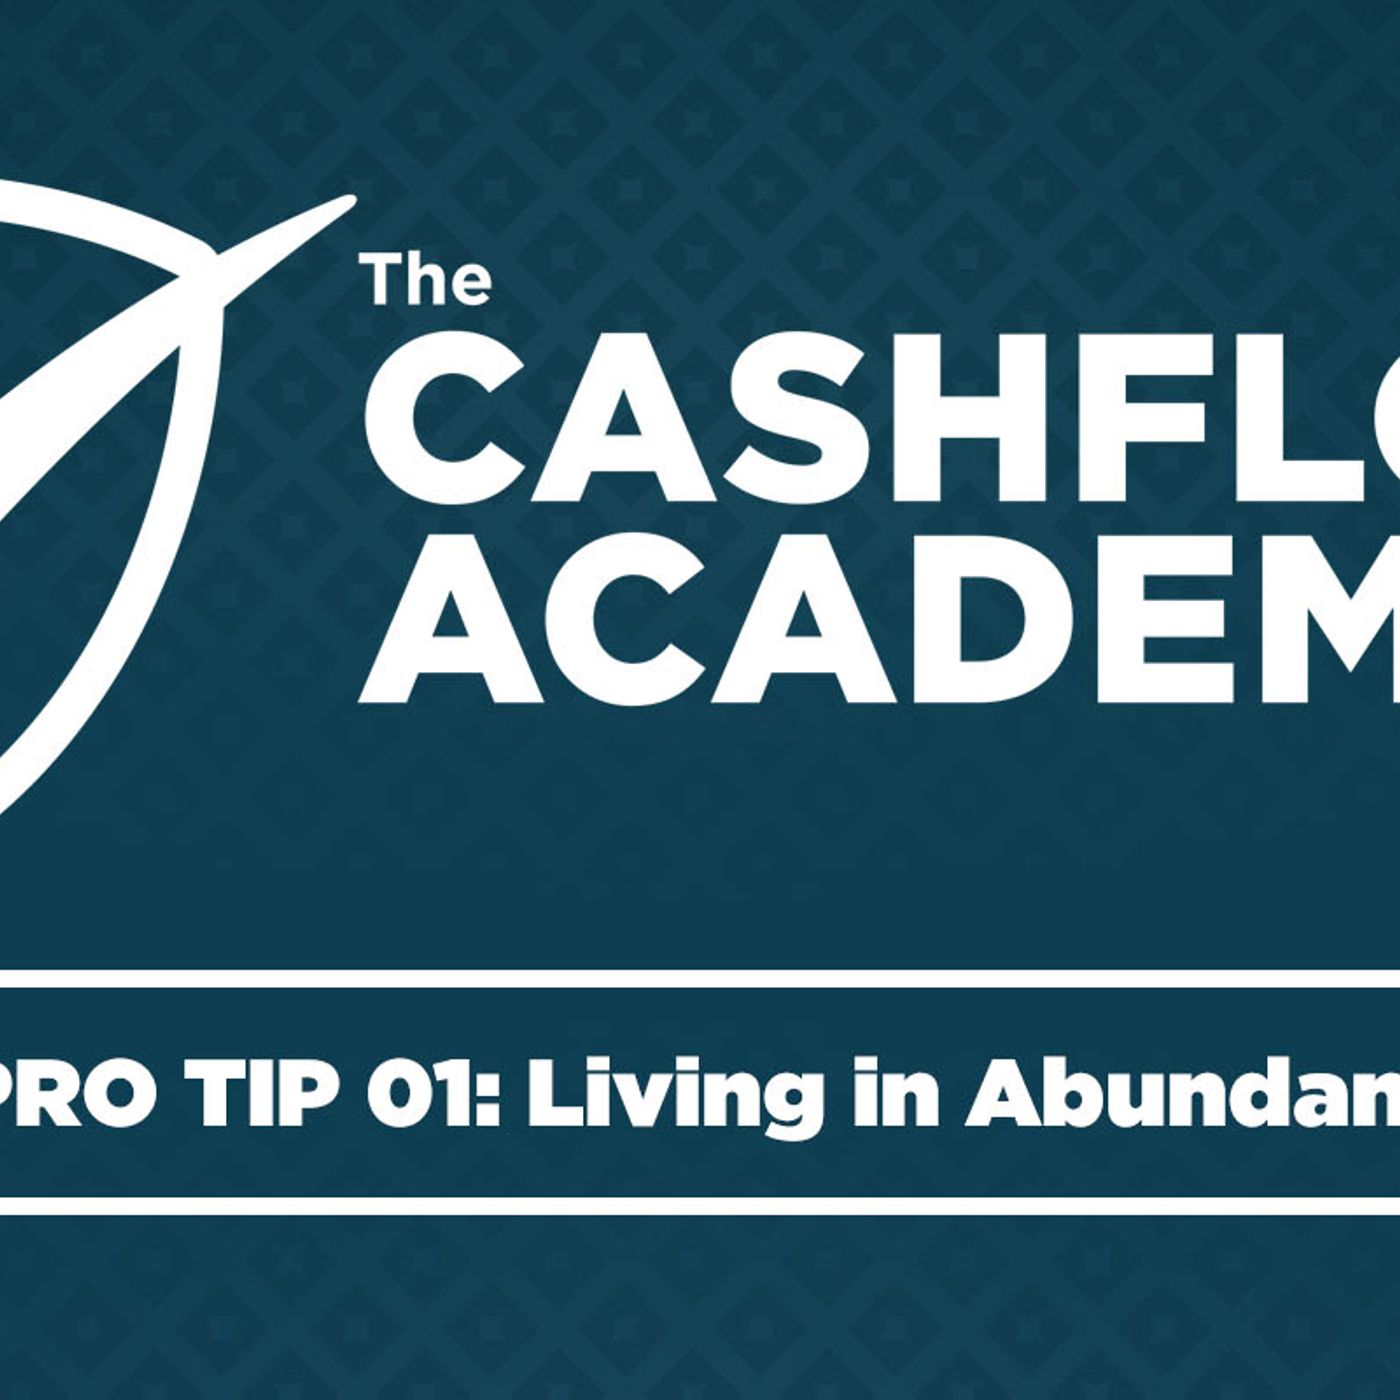 Living in Abundance (Pro Tip 01)